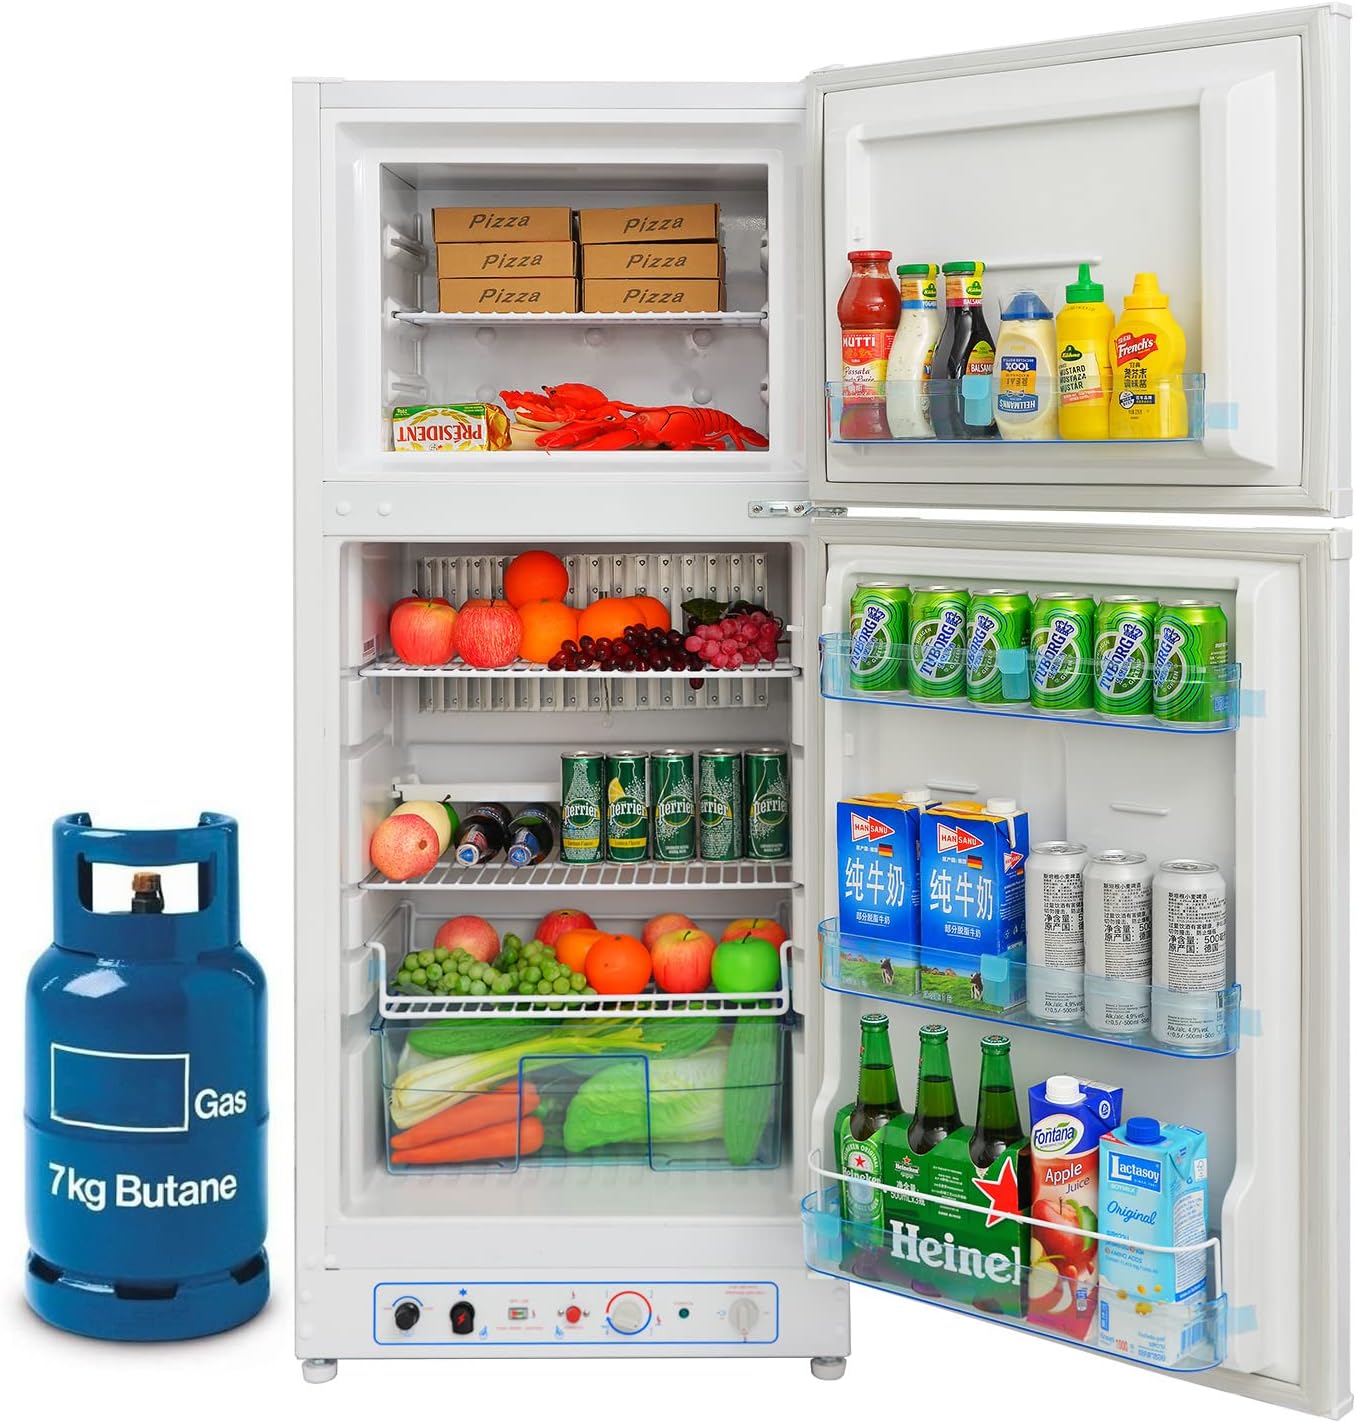 A refrigerator that opens internally